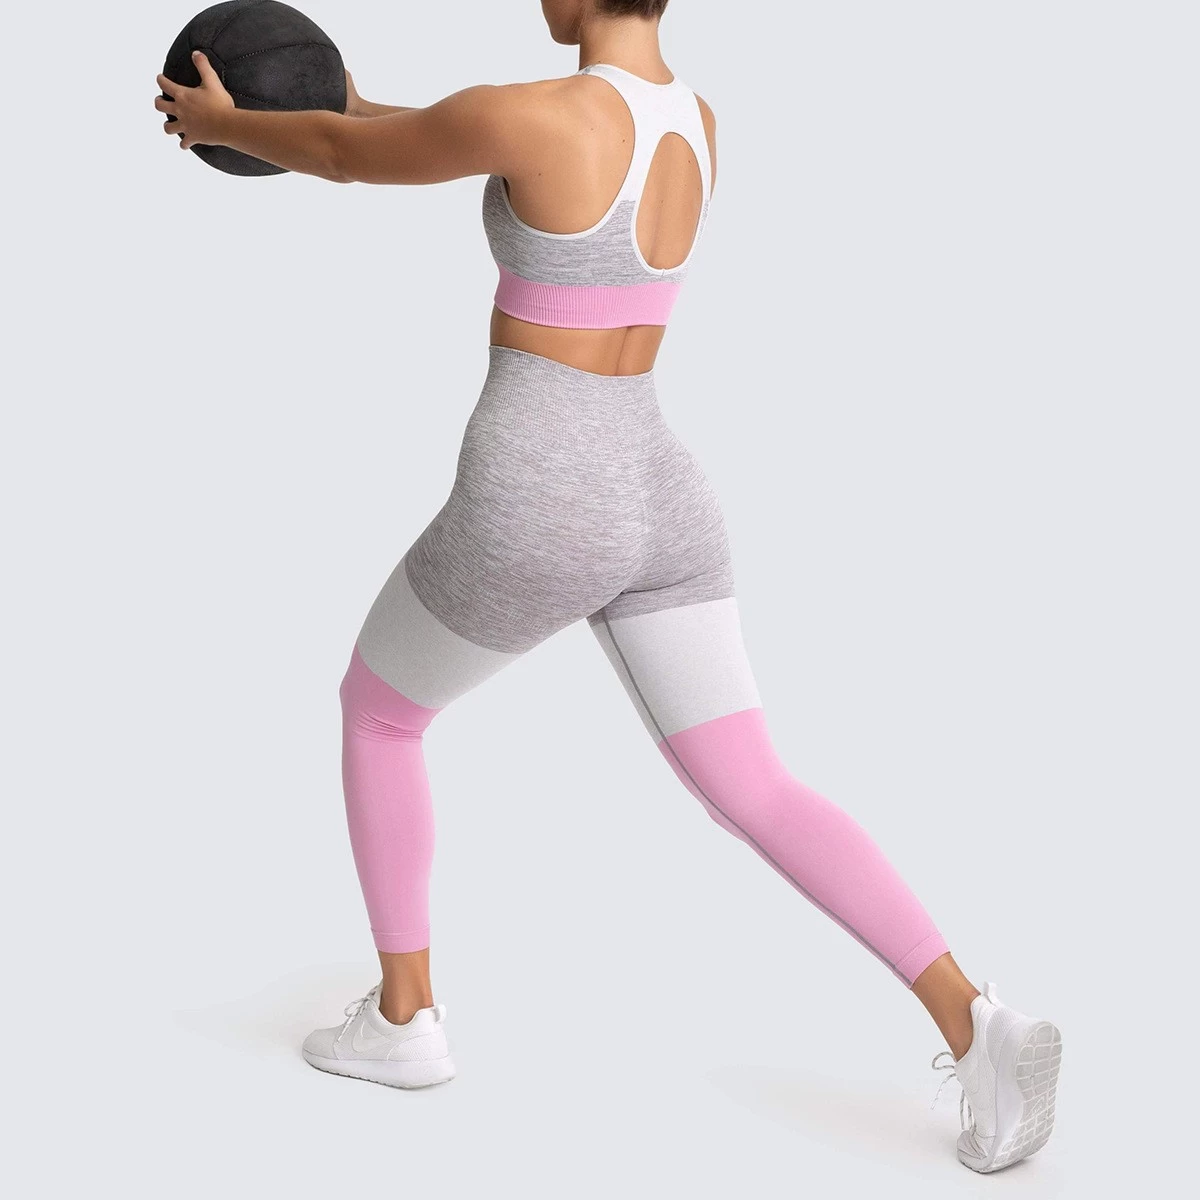 S-SHAPER Workout Sets for Women 2 Piece Workout Outfits Sports Seamless High Waist Yoga Gym Leggings Sleeveless Crop Tops Activewear